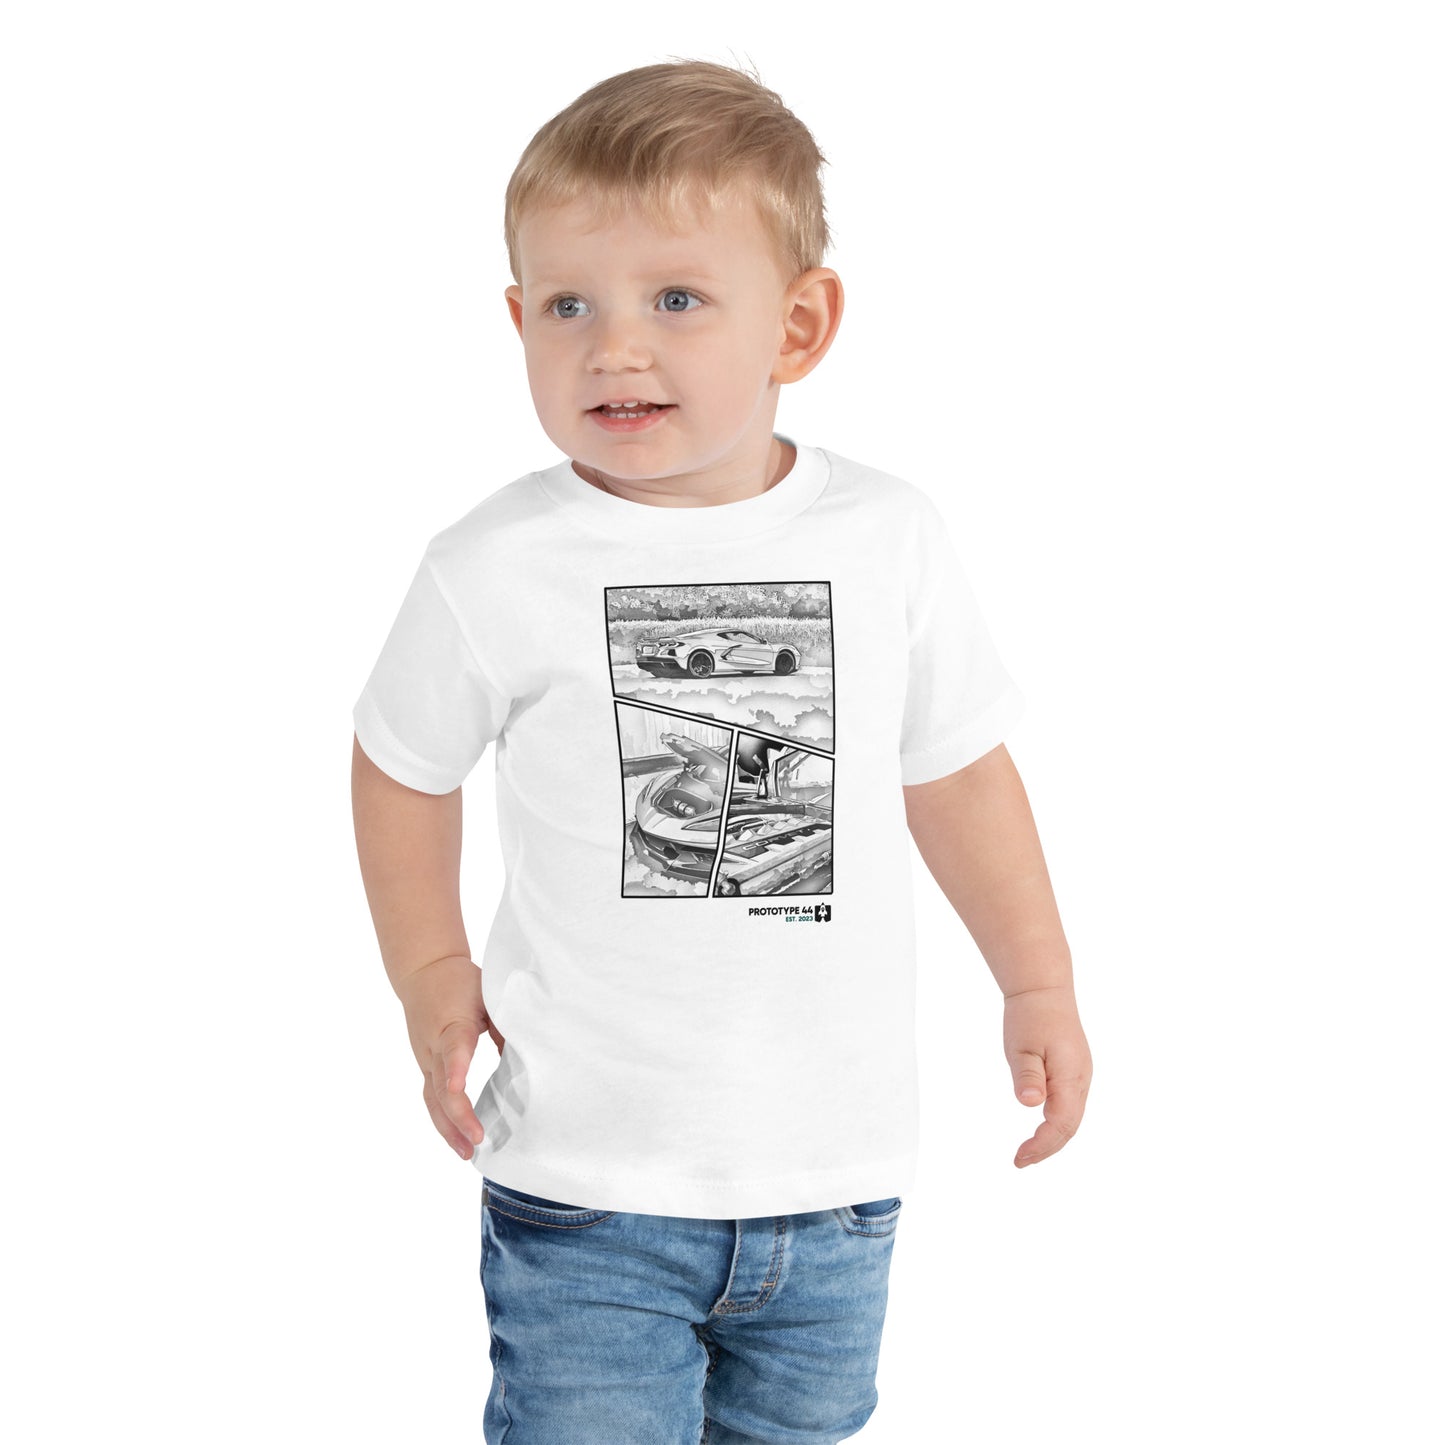 toddler boy wearing white corvette shirt